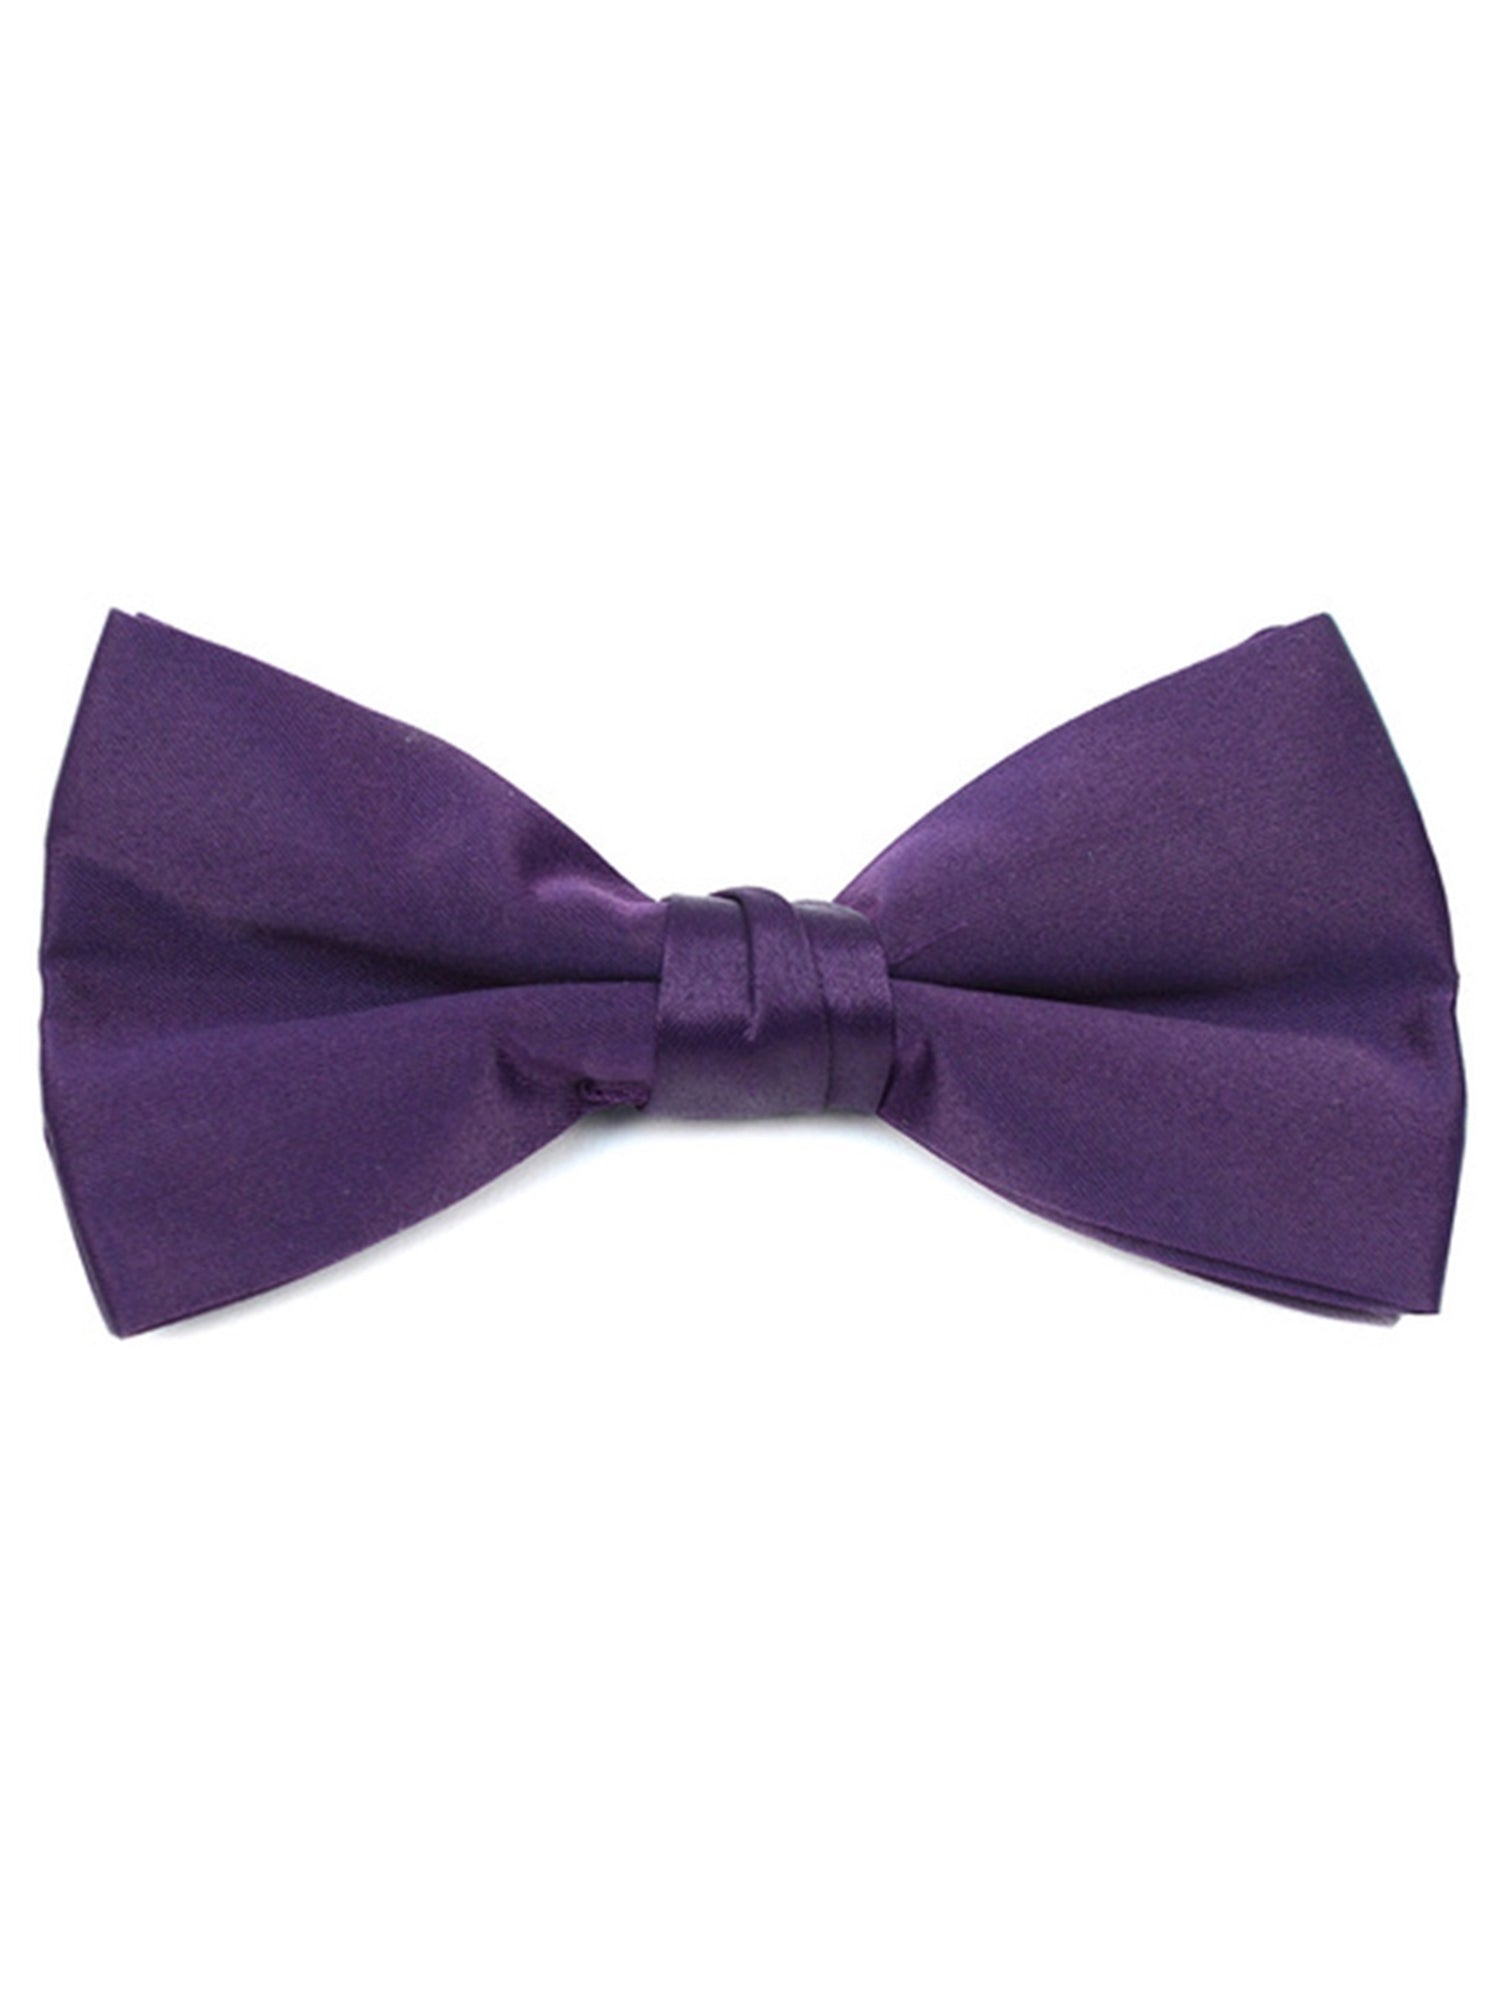 Young Boy's Pre-tied Adjustable Length Bow Tie - Formal Tuxedo Solid Color Boy's Solid Color Bow Tie TheDapperTie Dark Purple One Size 